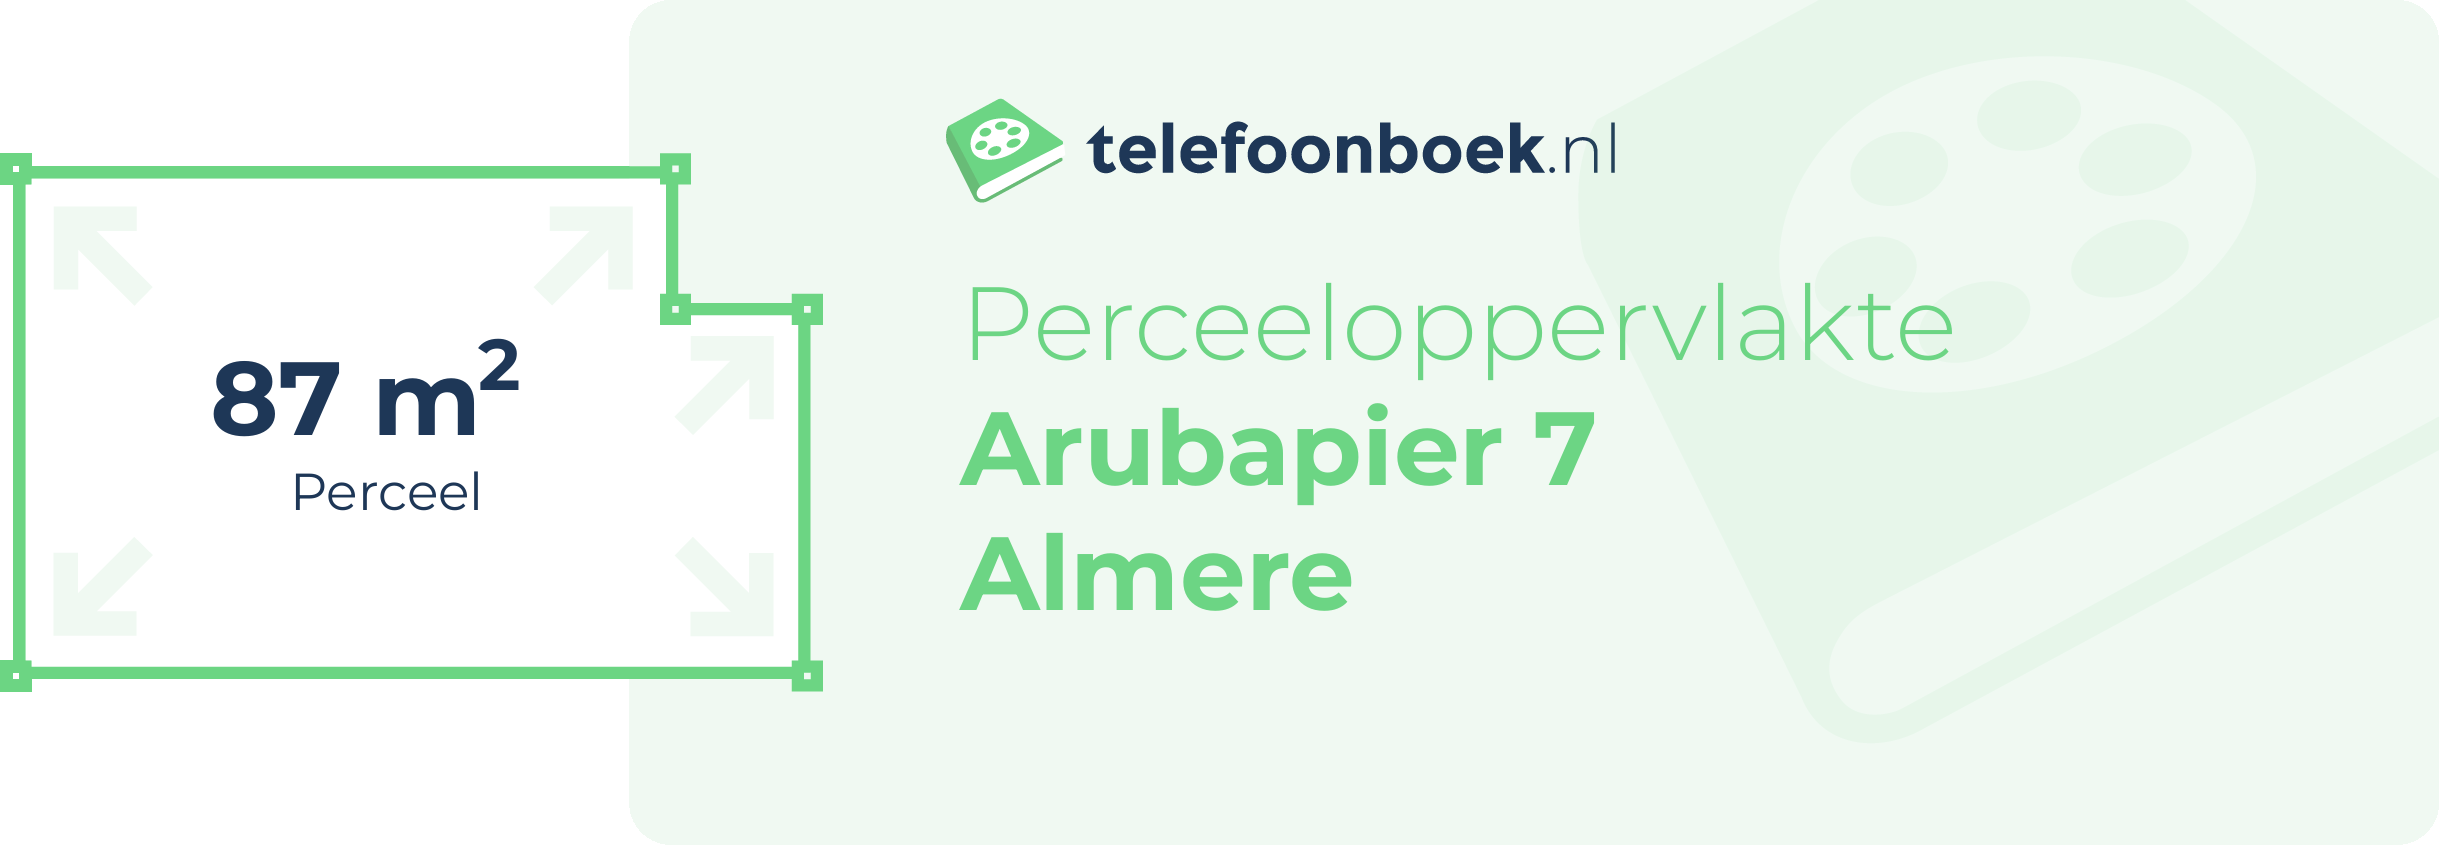 Perceeloppervlakte Arubapier 7 Almere